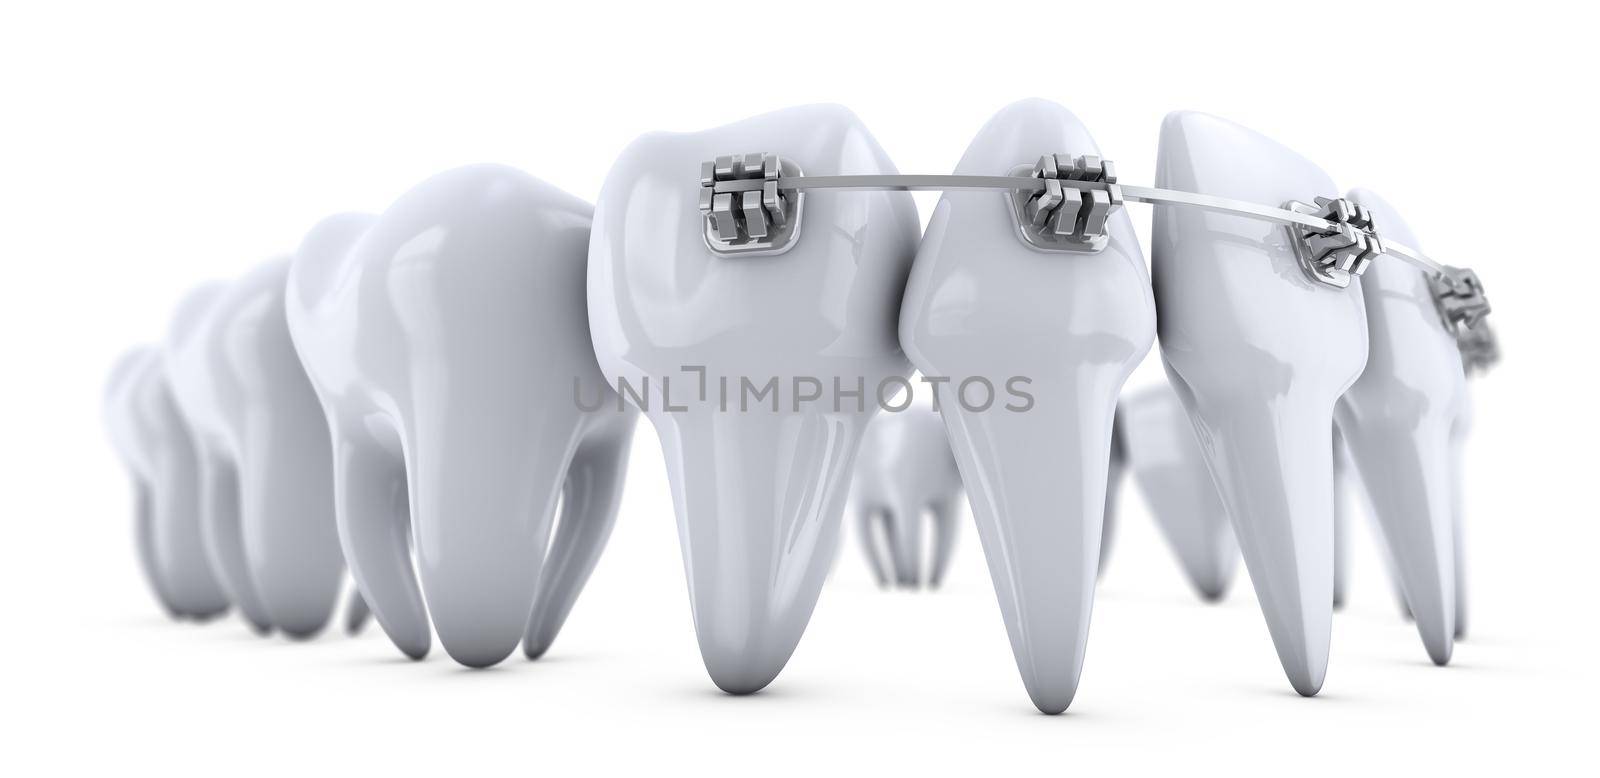 brackets on the teeth by rommma